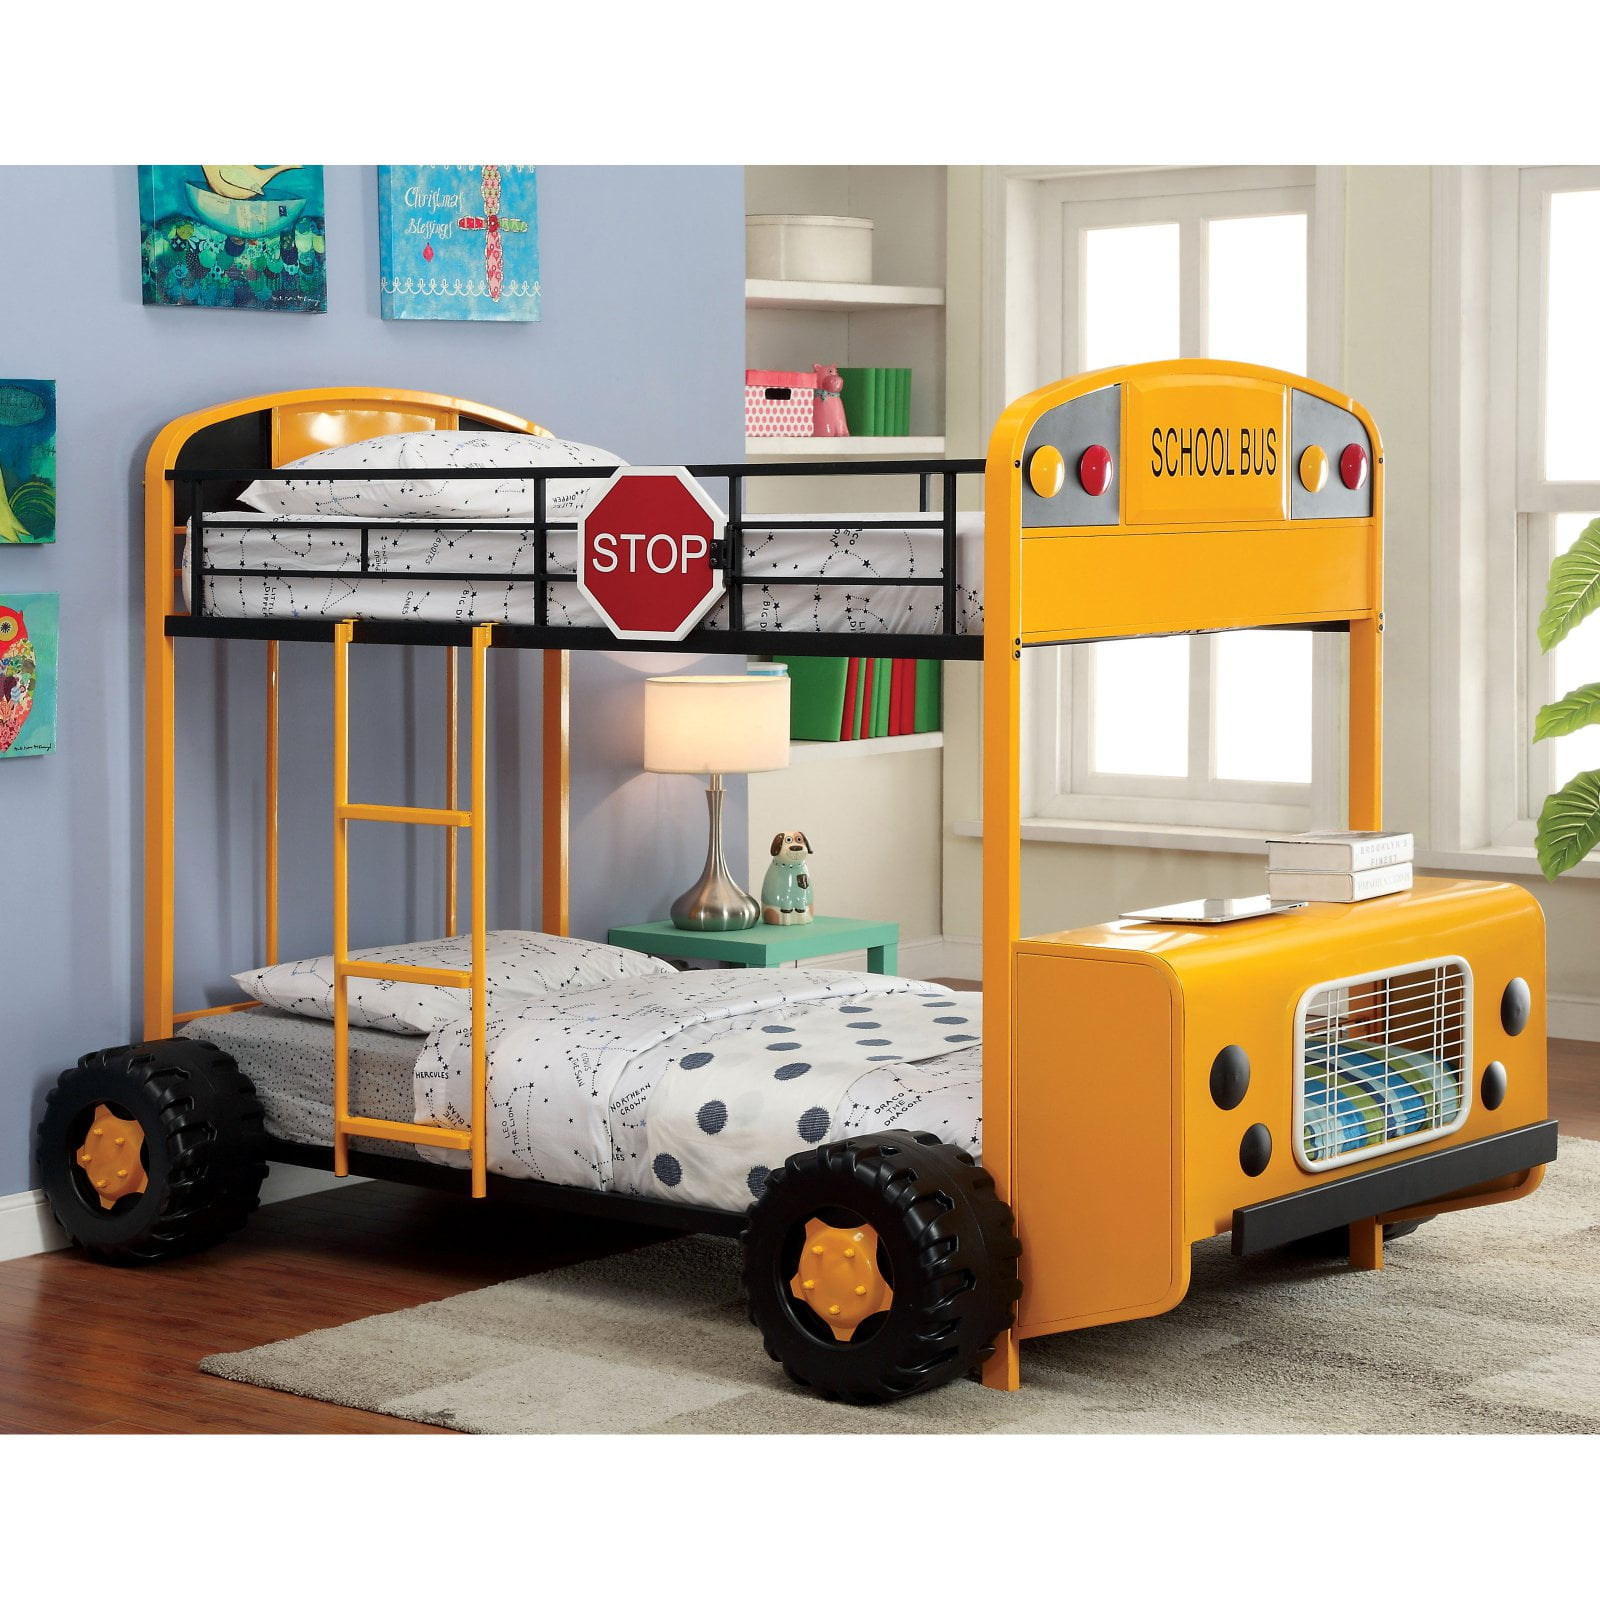 School Bus Twin Over Bunk Bed, School Bus Bunk Bed